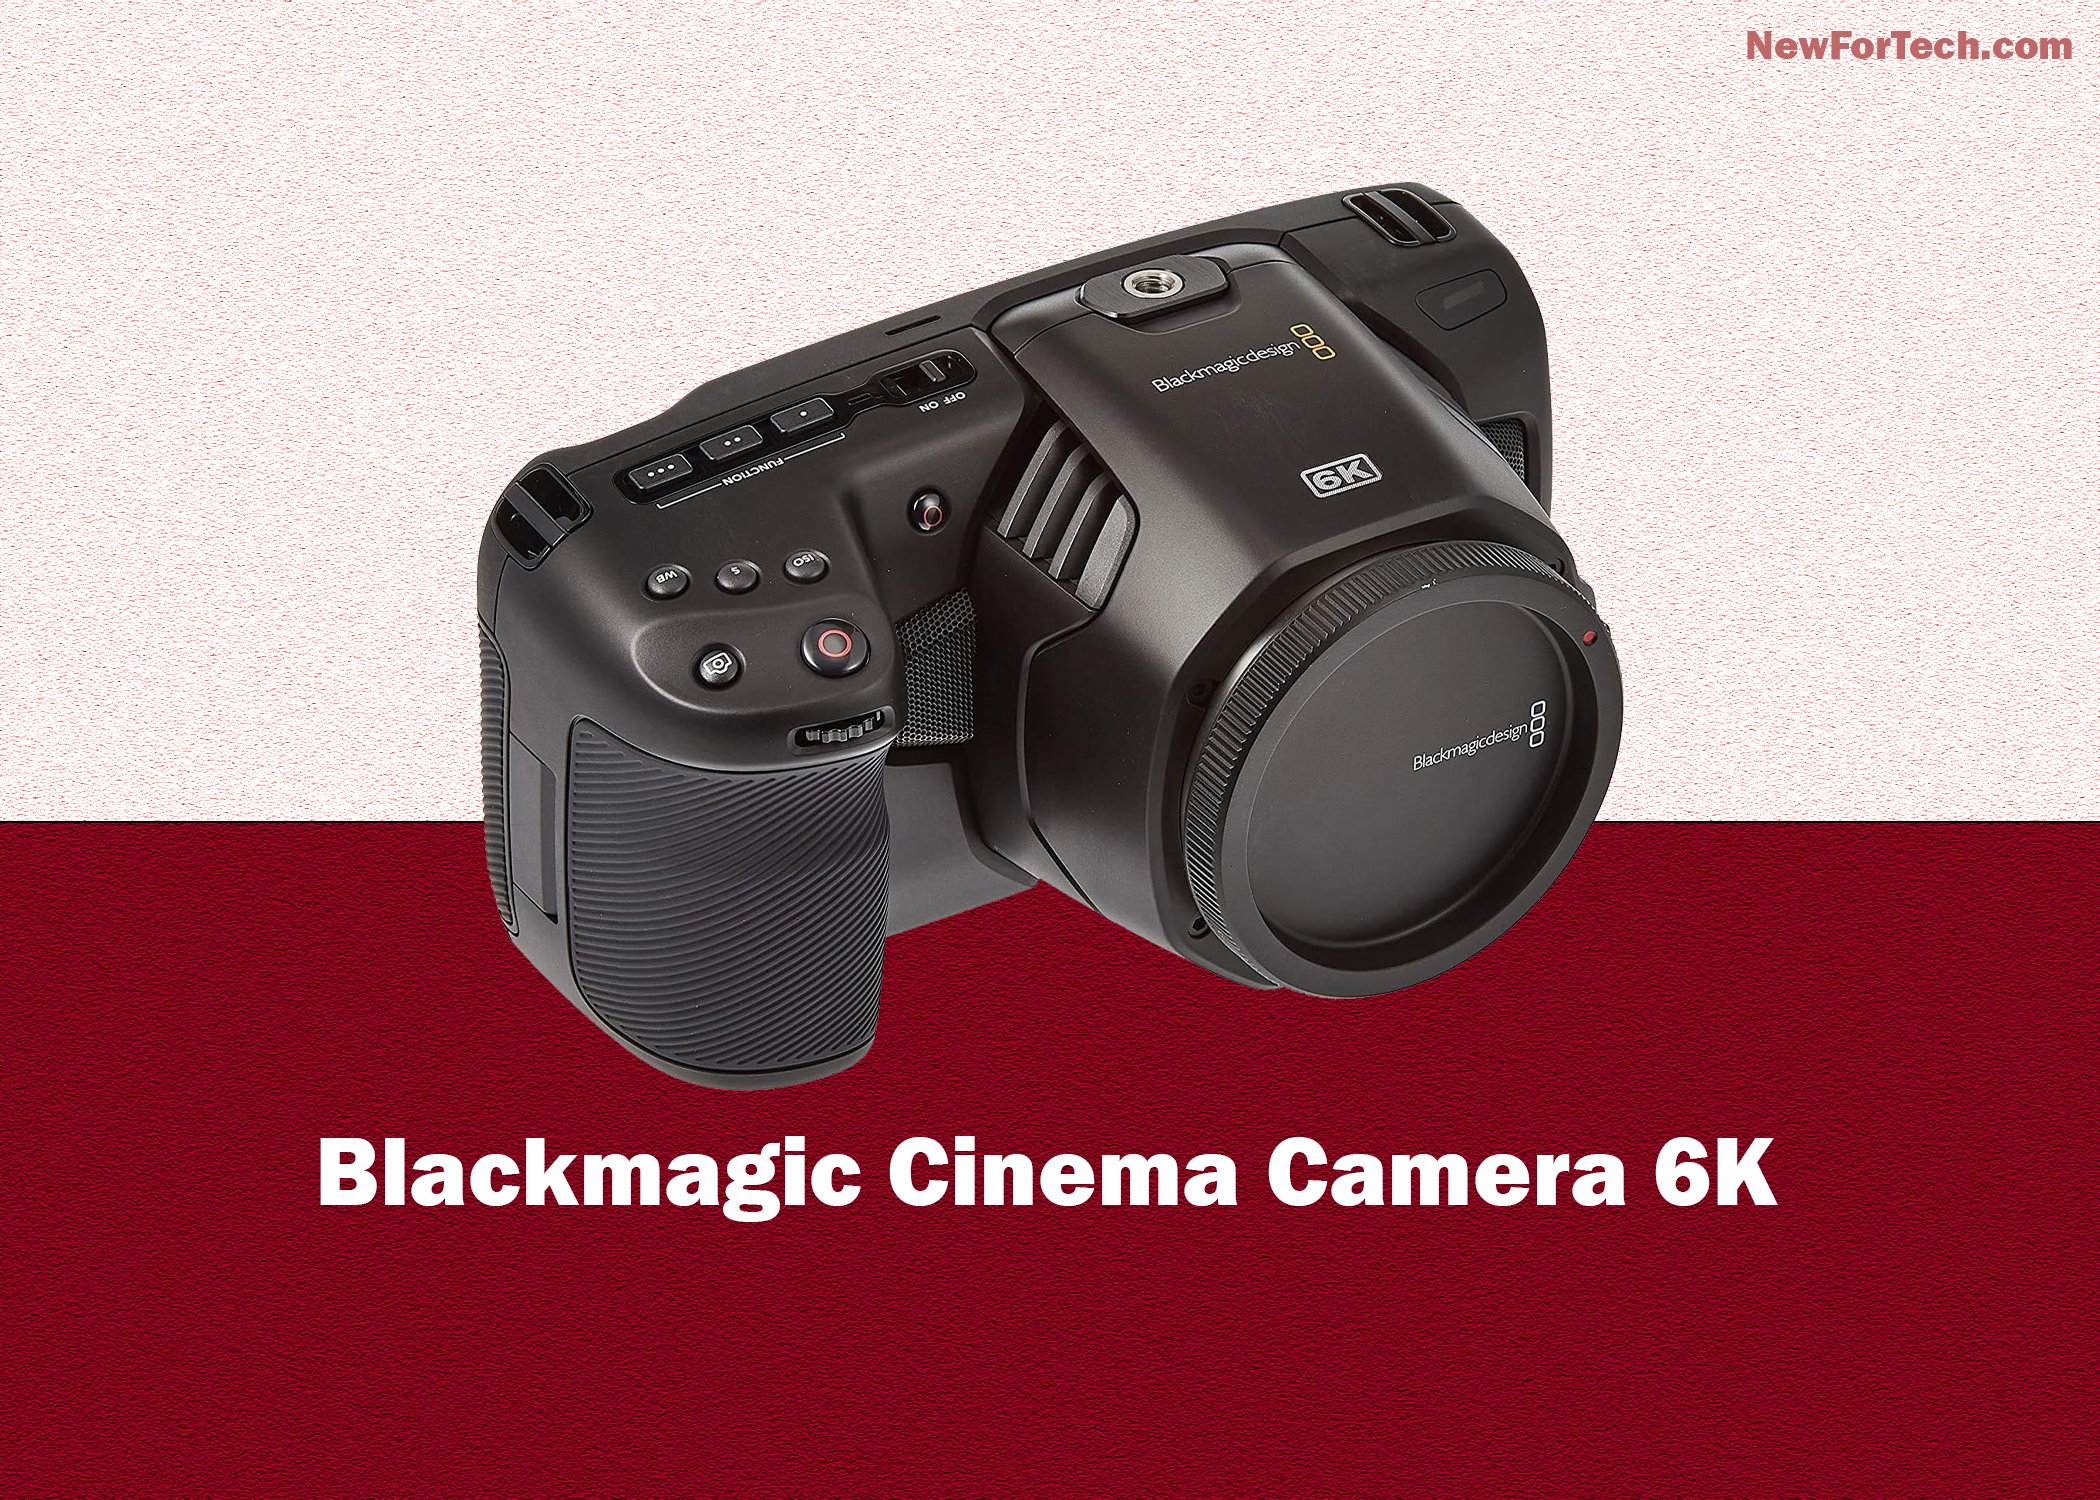 Blackmagic's First Full-Frame Cinema Camera Has 6K Sensor and L-Mount